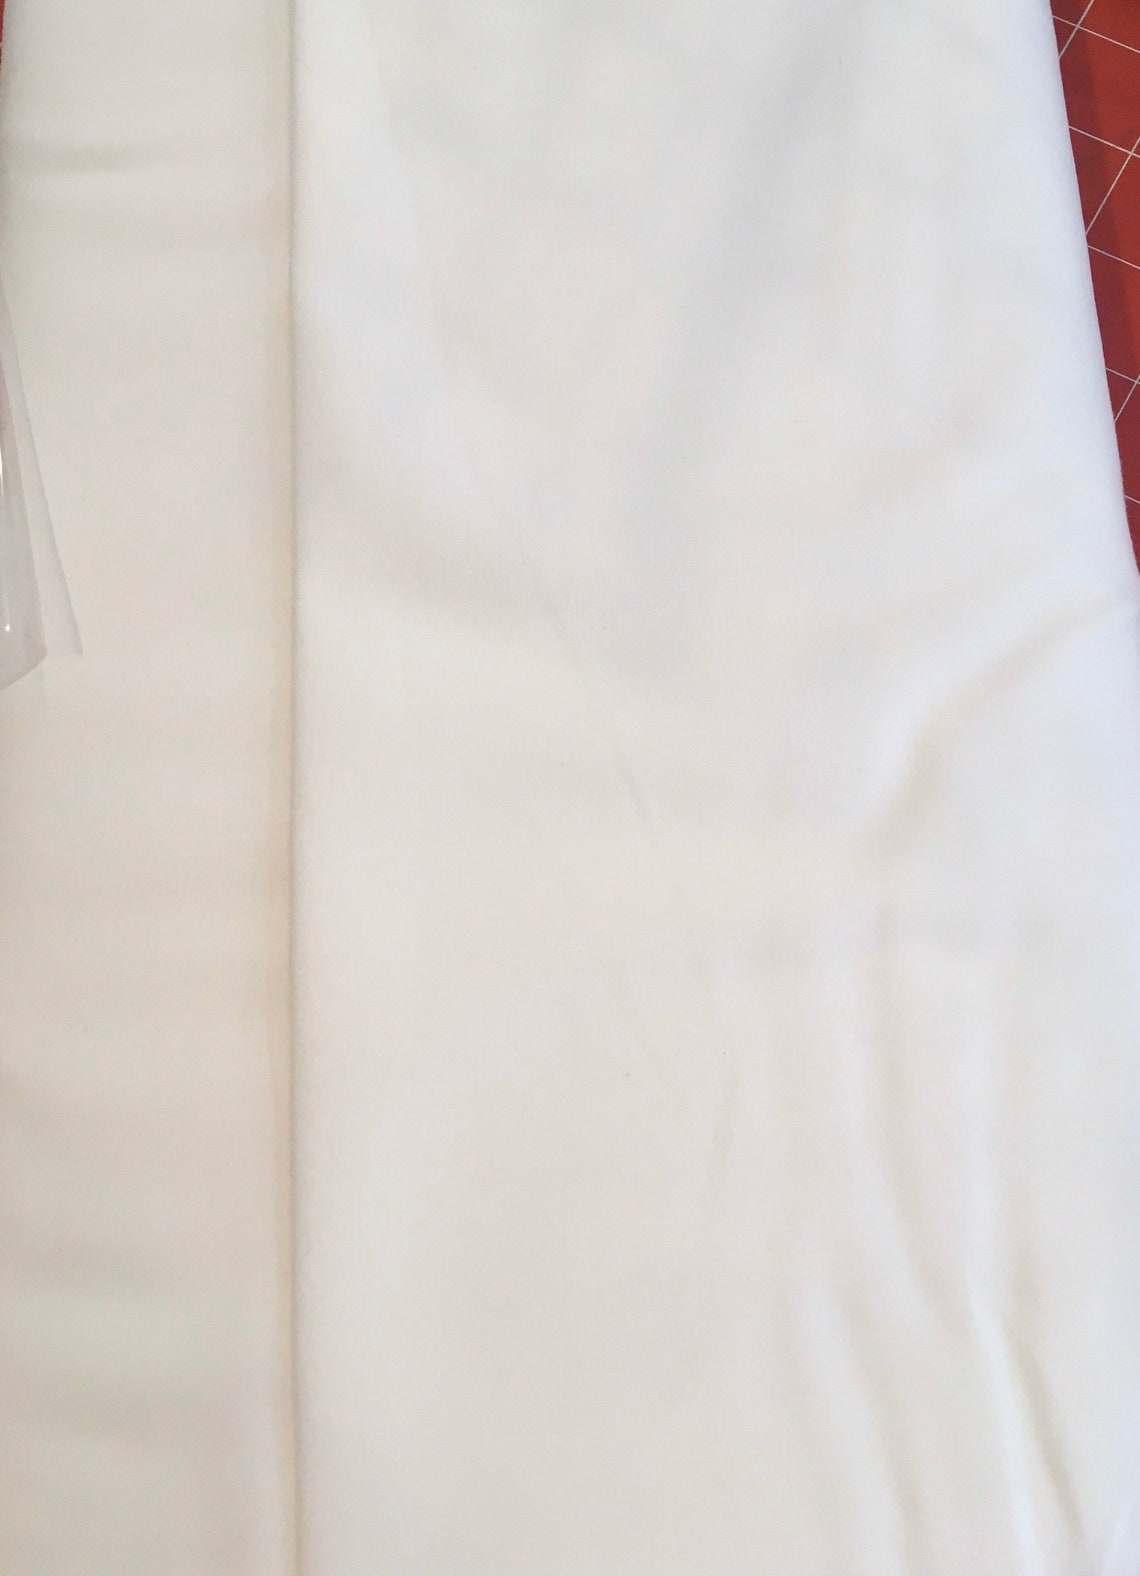 Moda Fabric Bella Solids Off White 1/2 yard 9900 200 | Etsy